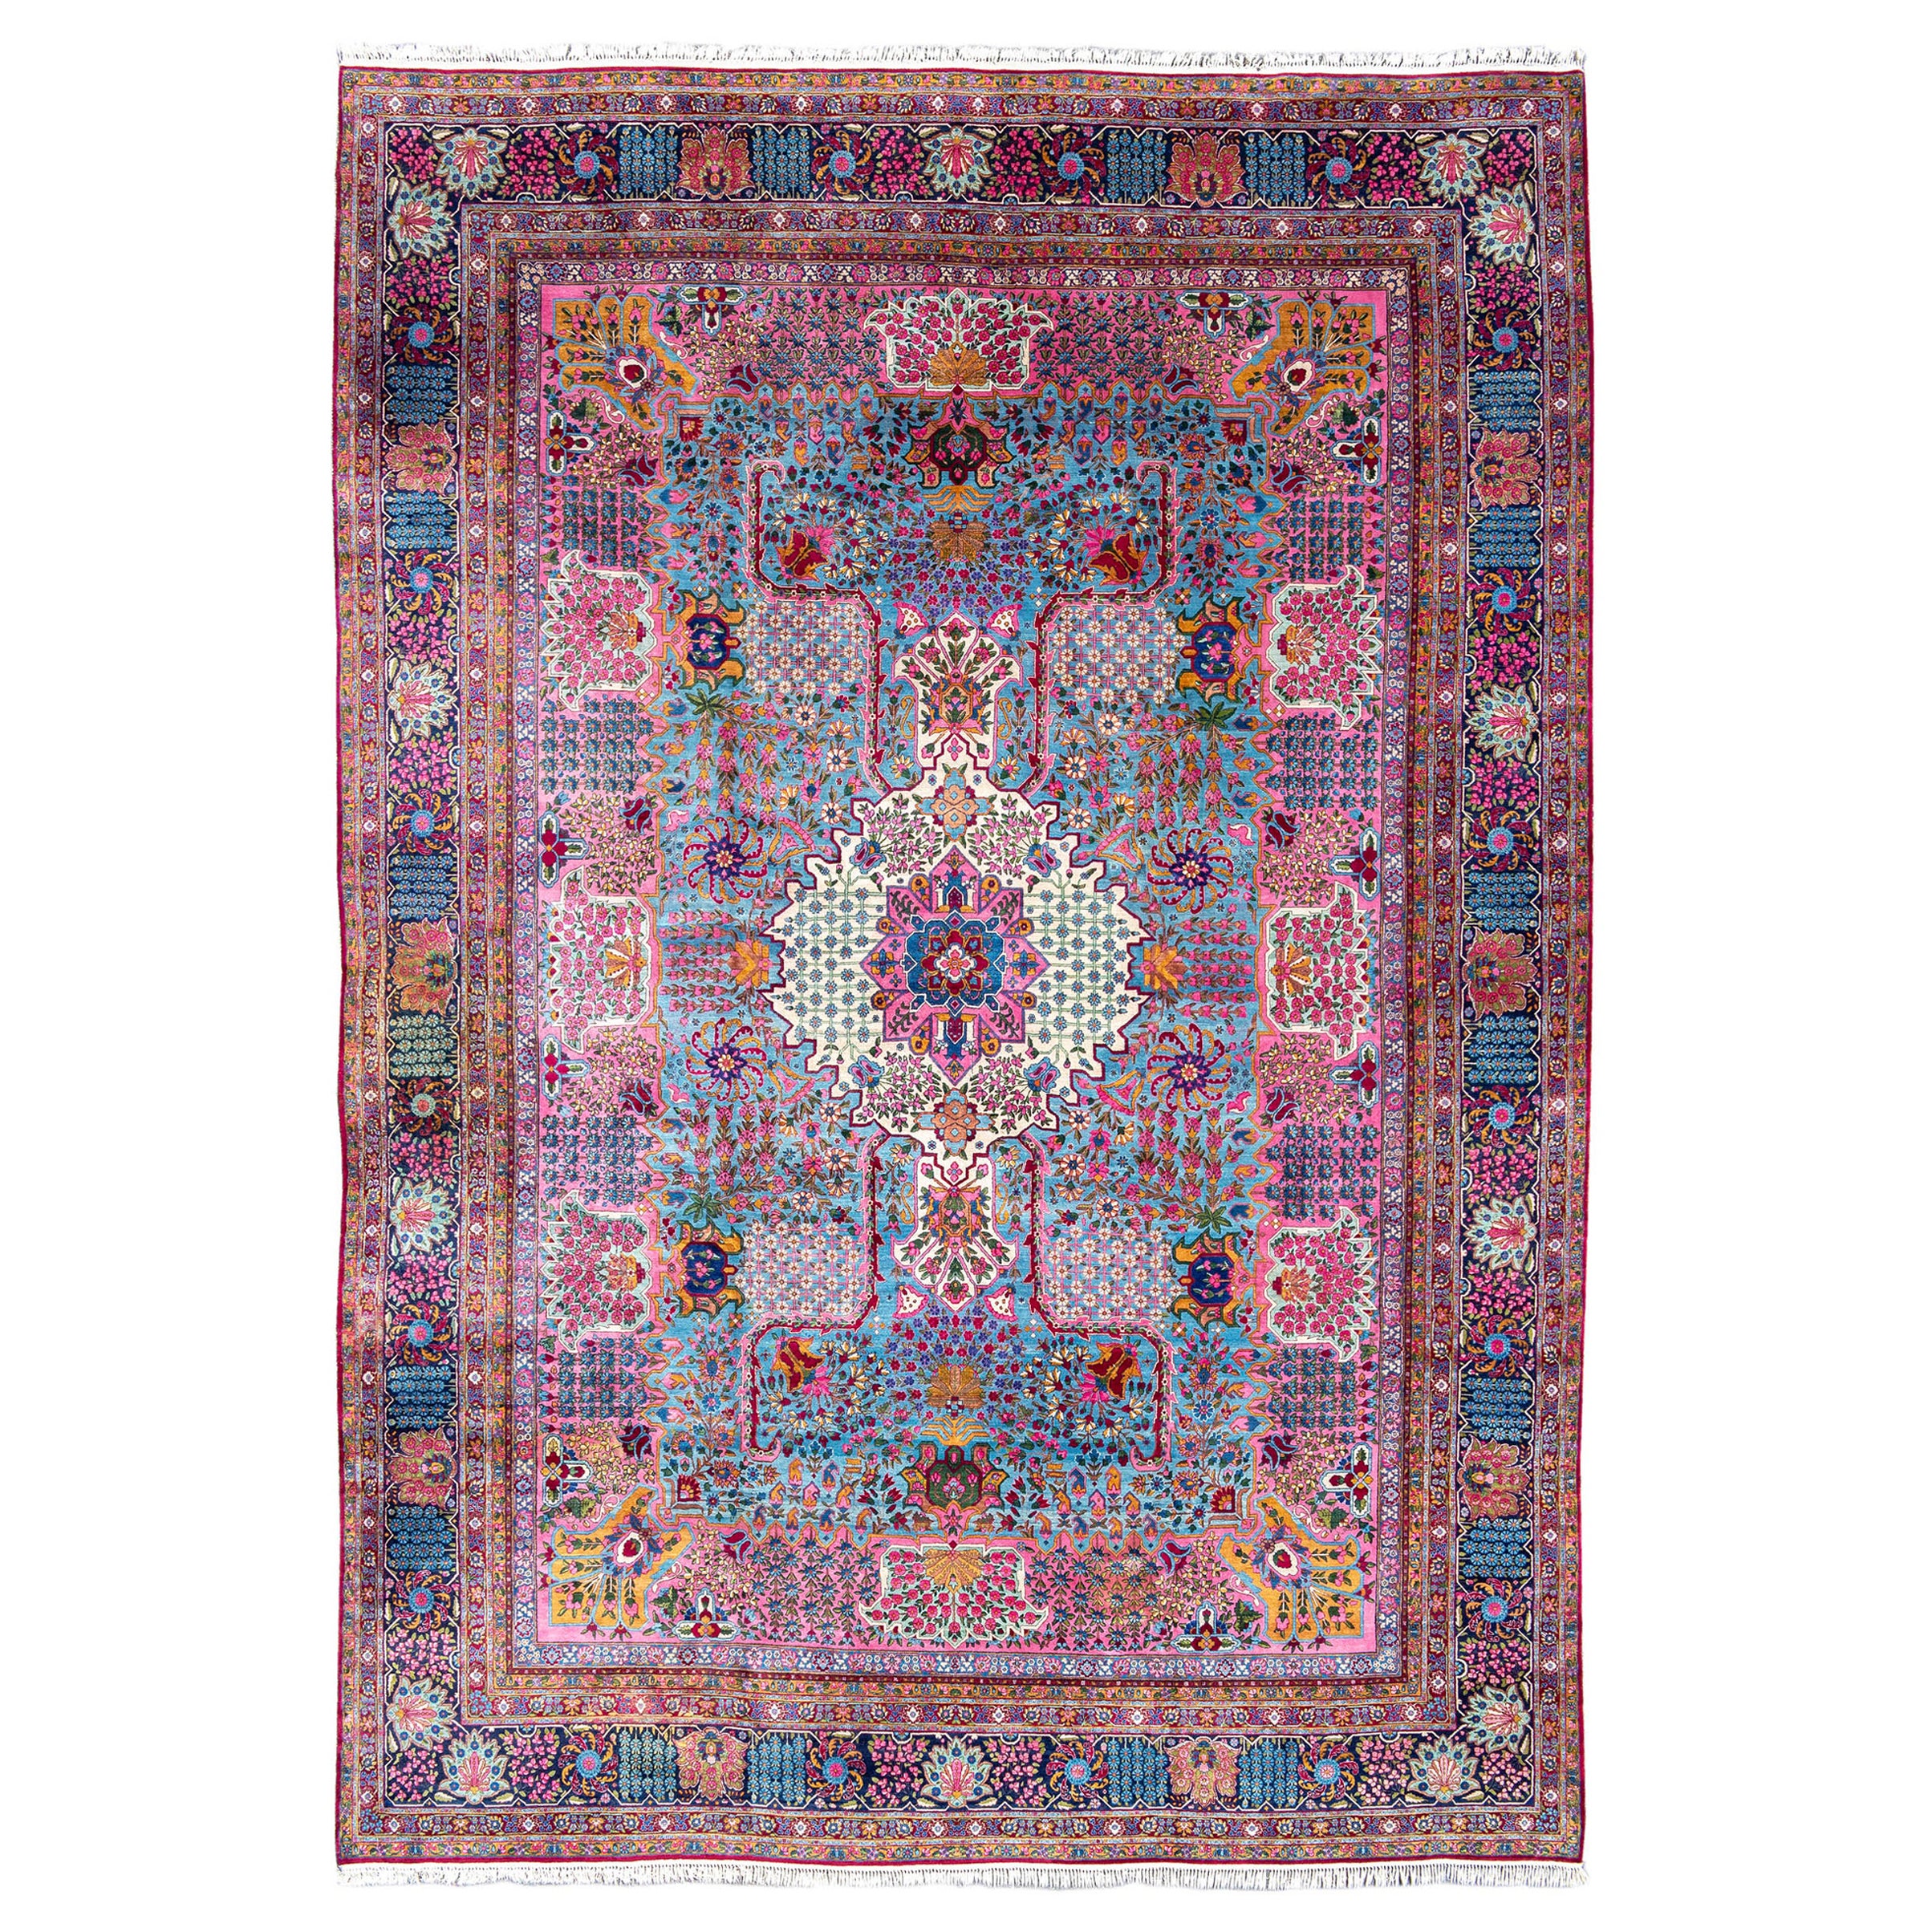 Antique Large Persian Kirman Carpet, Early 20th century